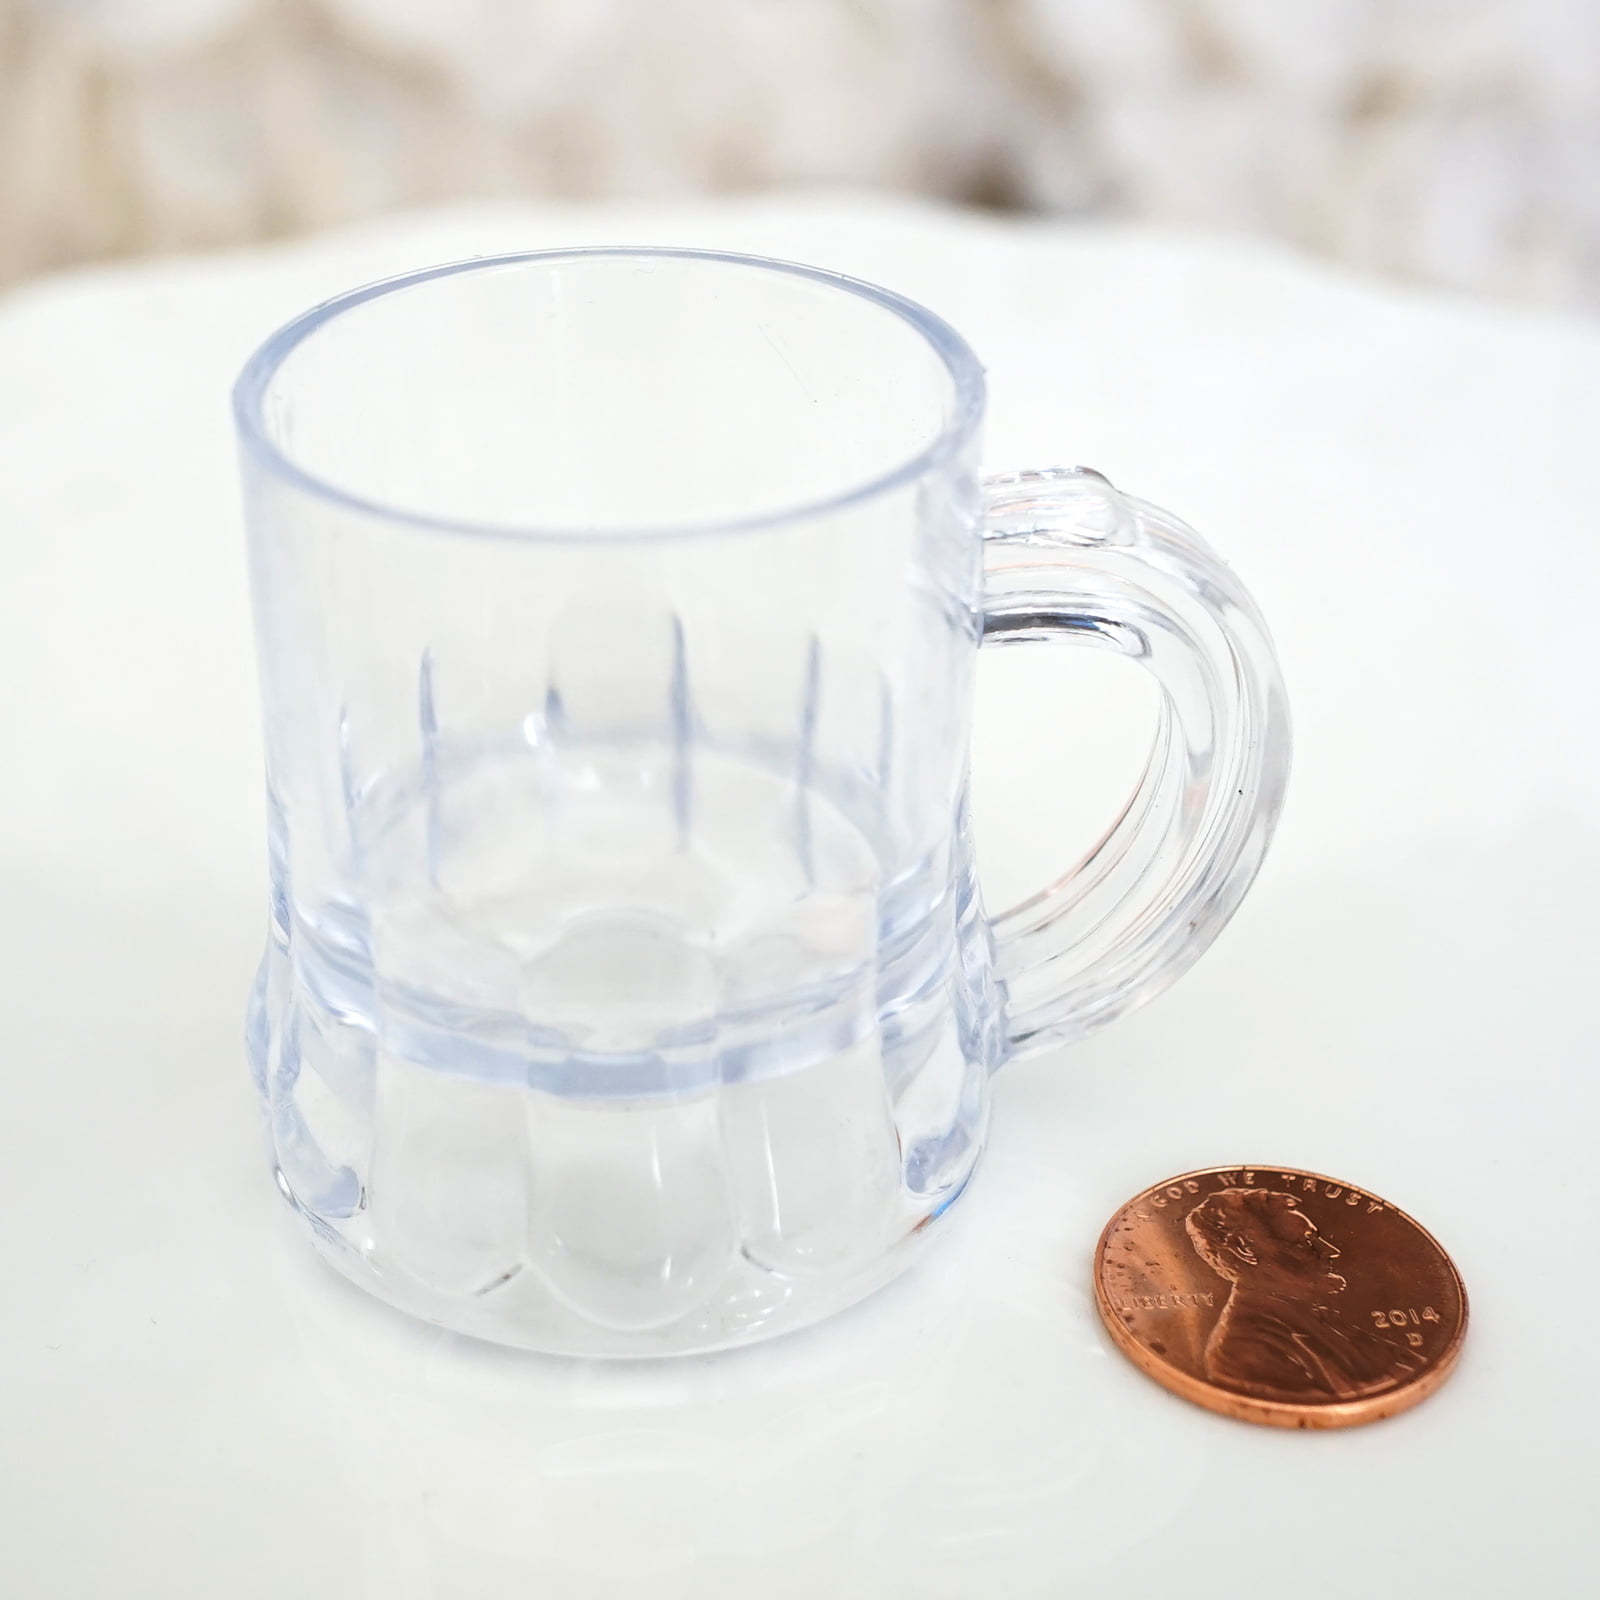 INFTYLE Mini Beer Mug Set of 24, Shot Glasses 1 oz Steins Beer Glass Mason  Clear Mugs Small Juice Cu…See more INFTYLE Mini Beer Mug Set of 24, Shot